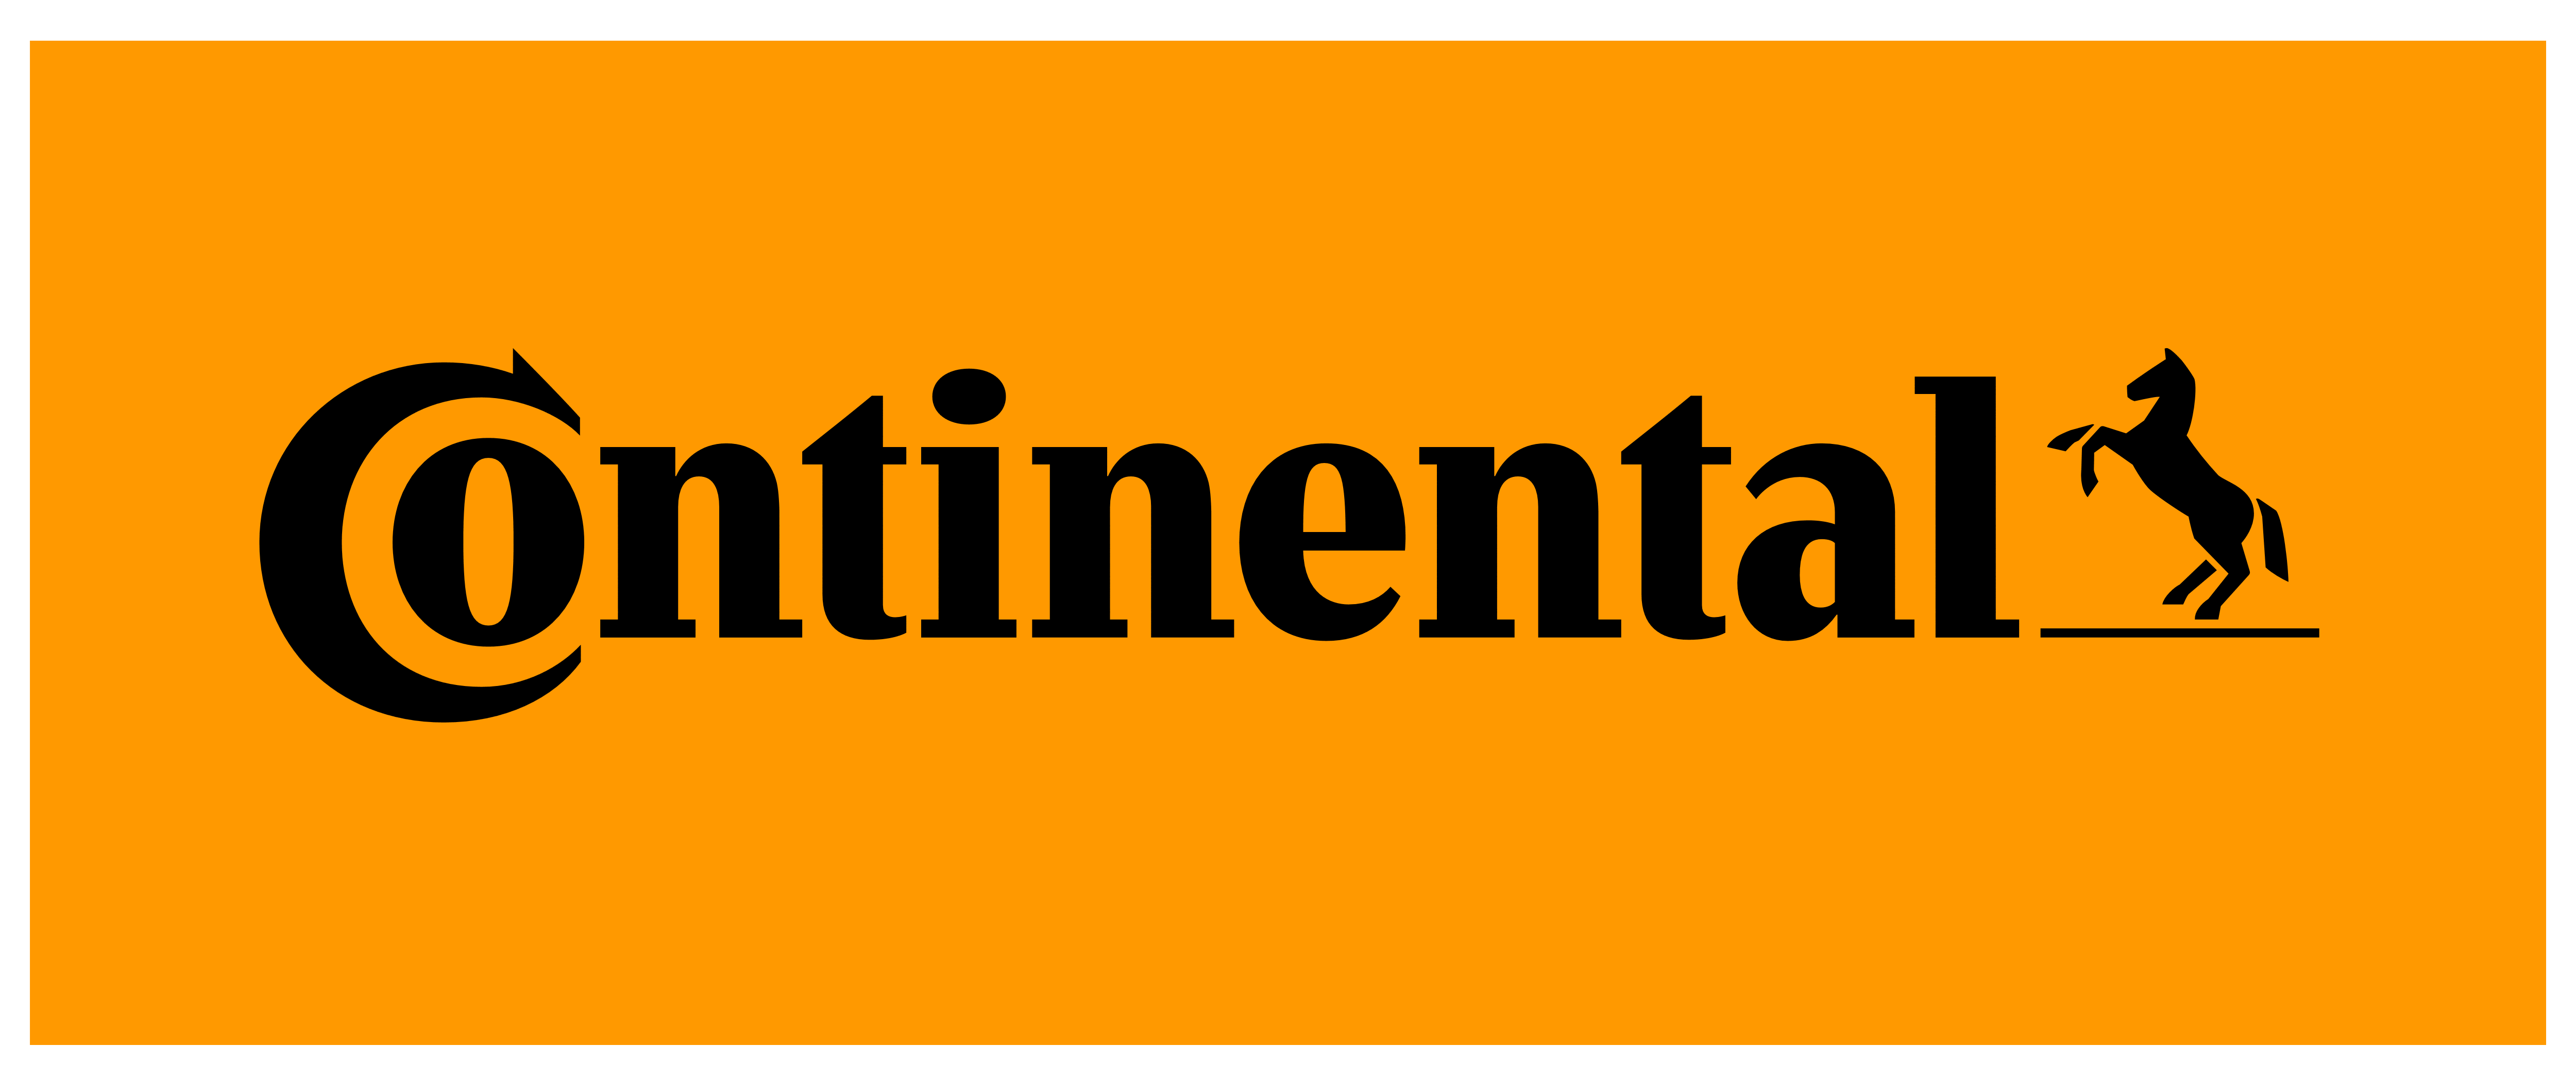 Logo Continental - Continenta